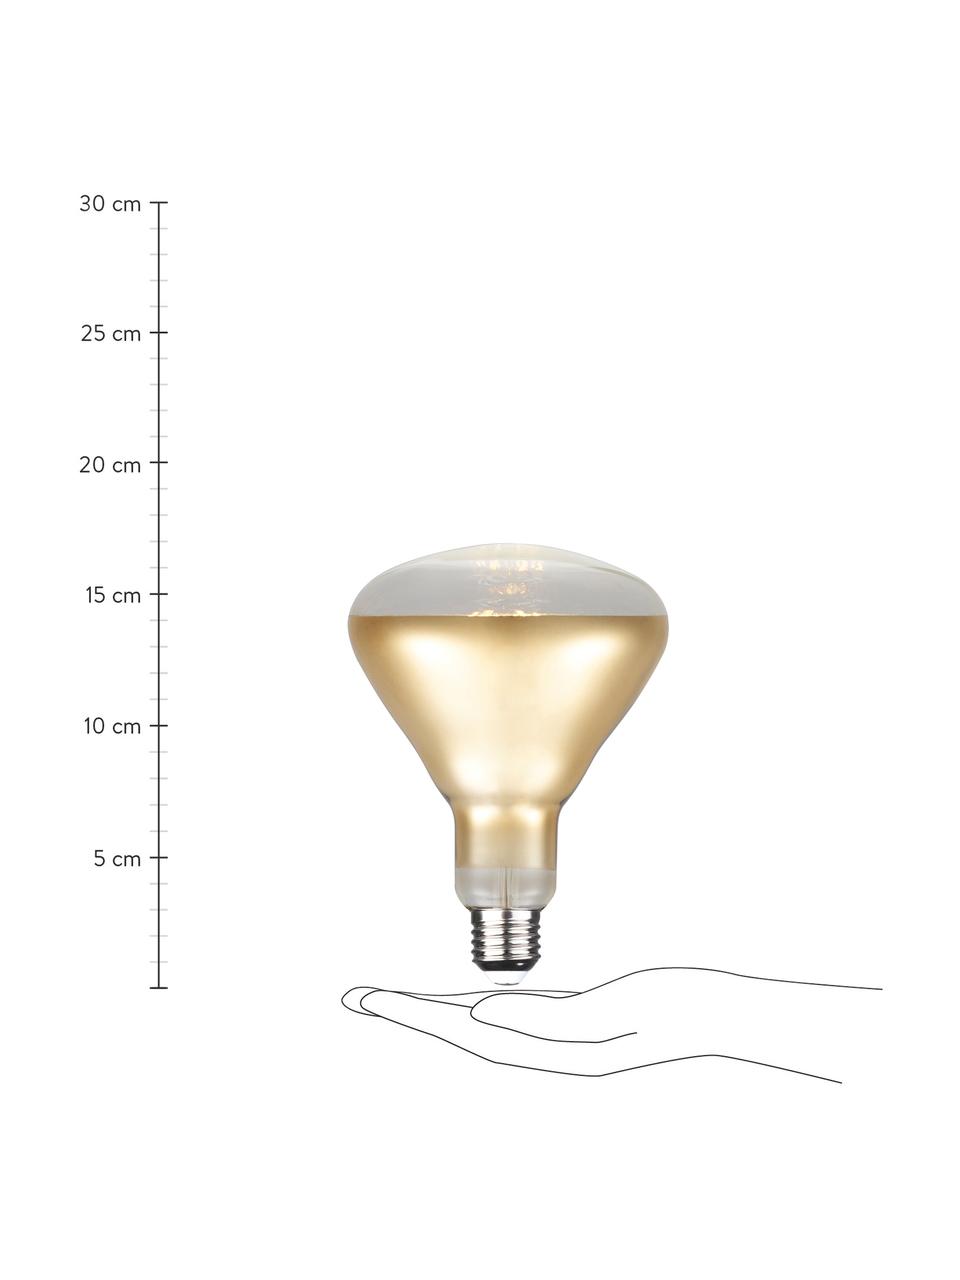 E27 Leuchtmittel, 550lm, dimmbar, warmweiß, 1 Stück, Leuchtmittelschirm: Glas, Leuchtmittelfassung: Aluminium, Goldfarben, Ø 13 x H 17 cm